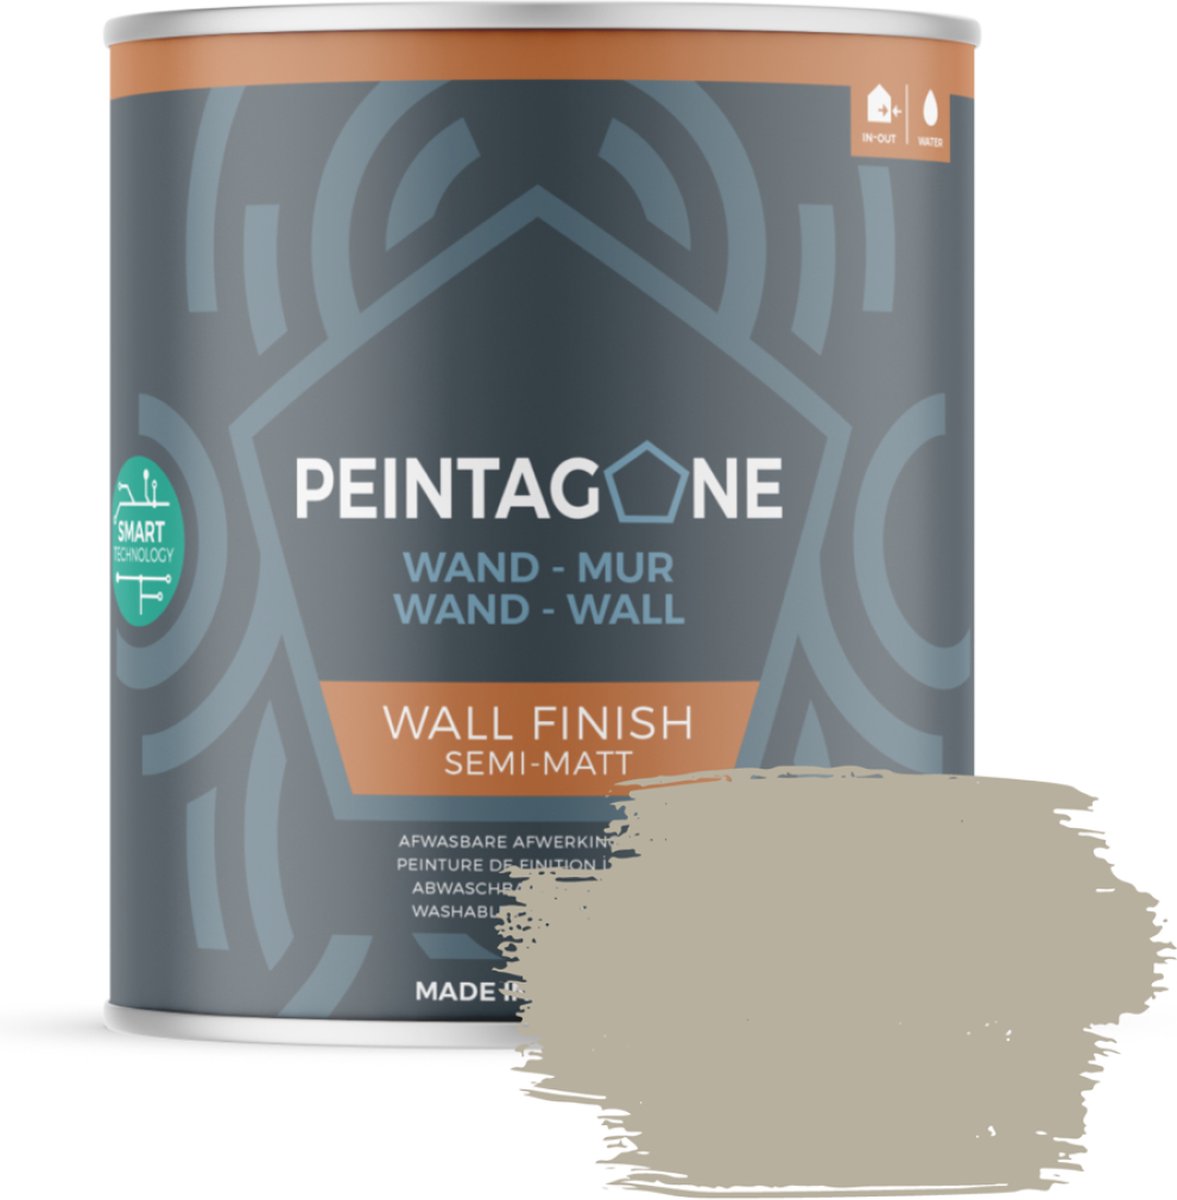 Peintagone - Wall Finish Semi-Mat - 4 liter - PE045 Original